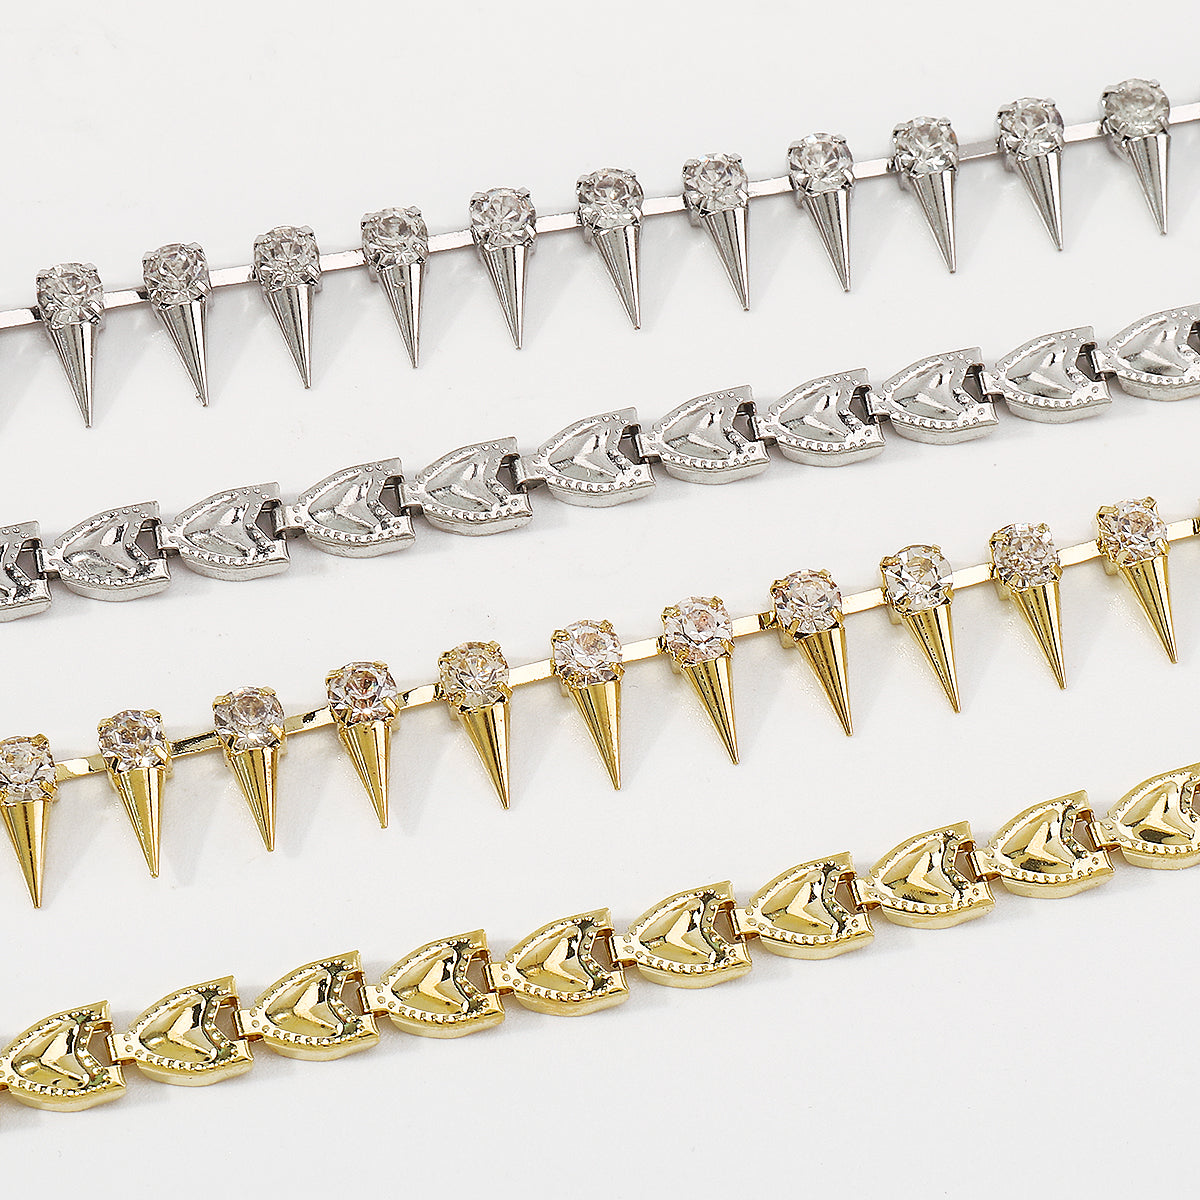 Spike Rivet Rhinestone Choker Necklace medyjewelry